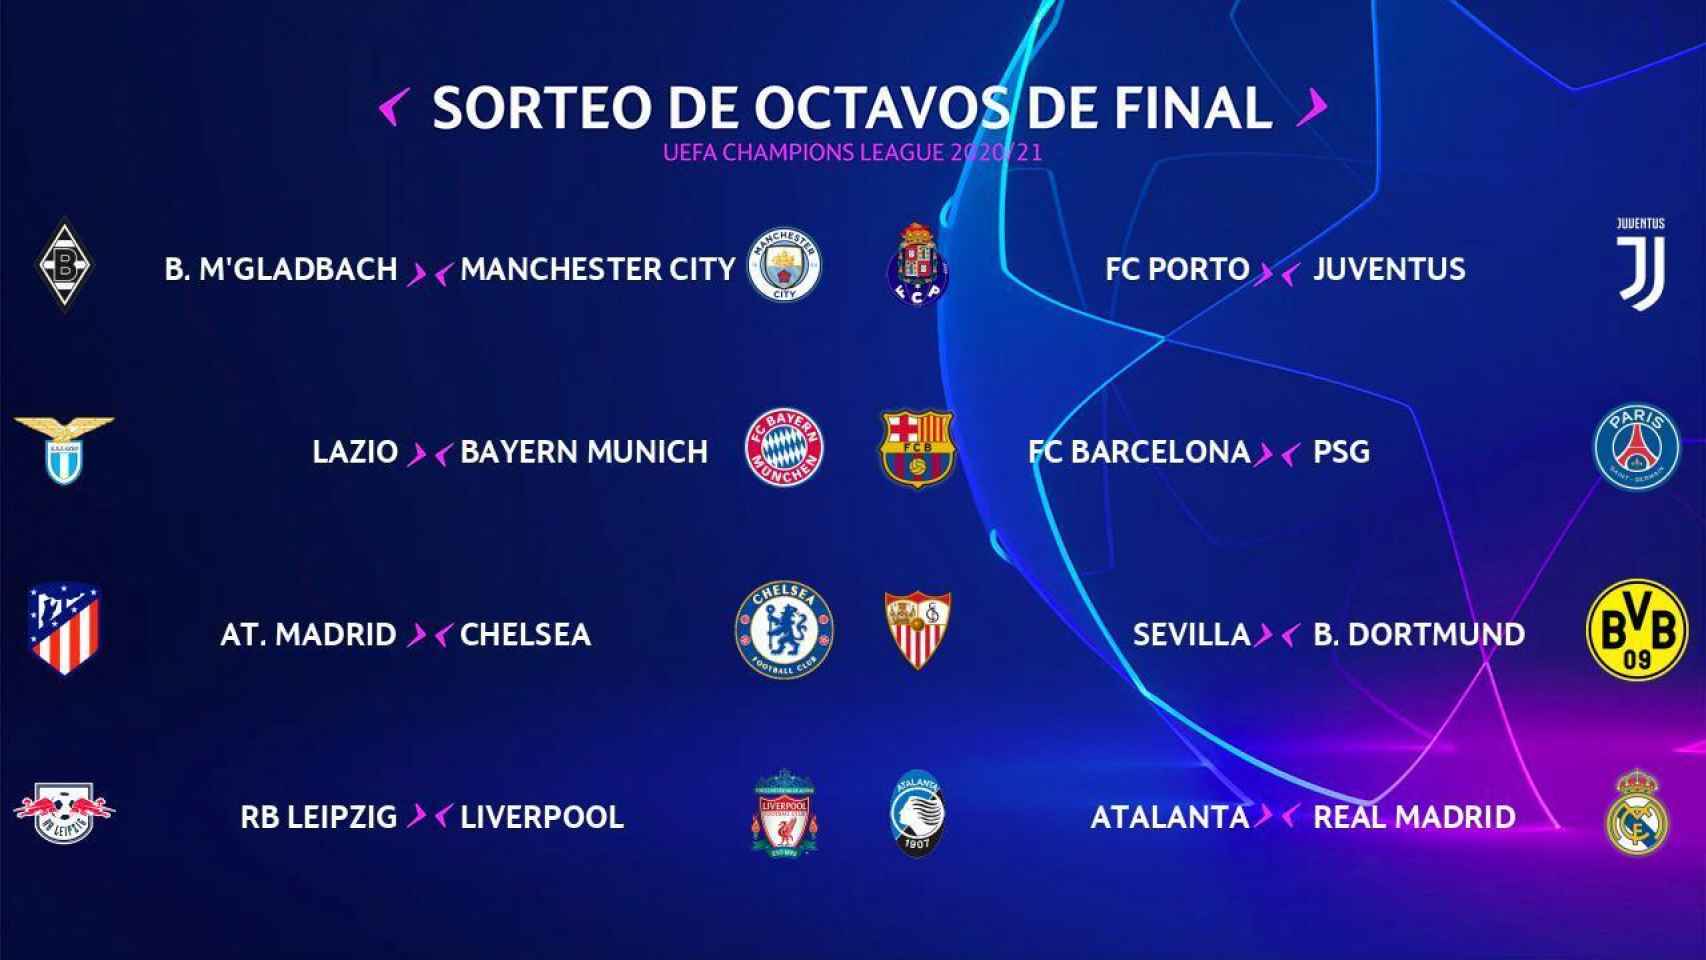 Los cruces del sorteo de octavos de final de Champions League